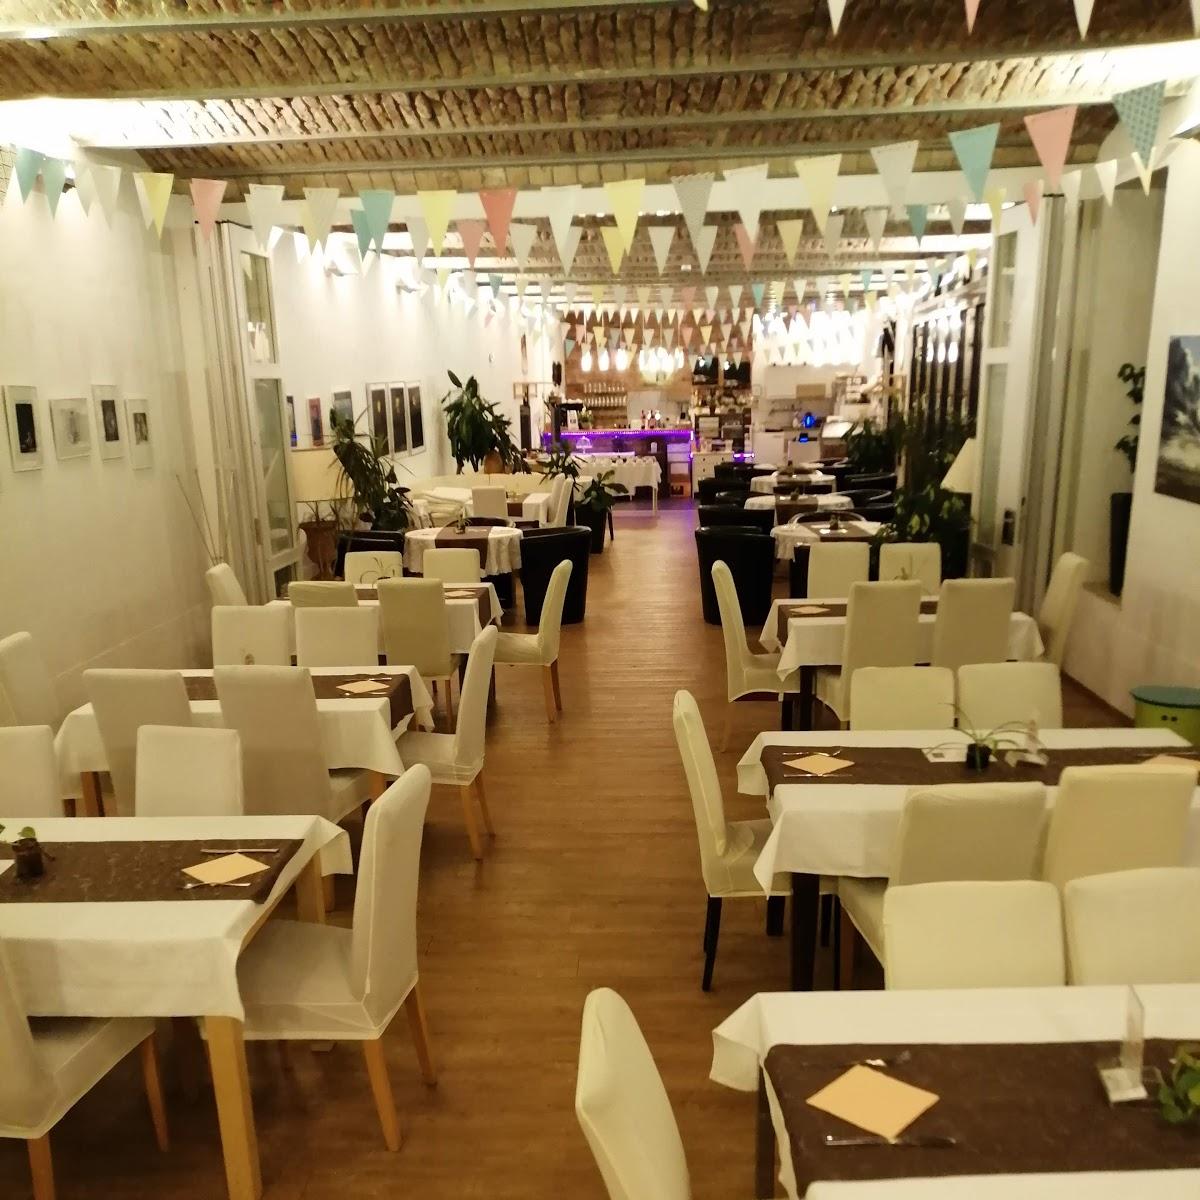 Restaurant "cafe im wittnerhof" in Gramatneusiedl